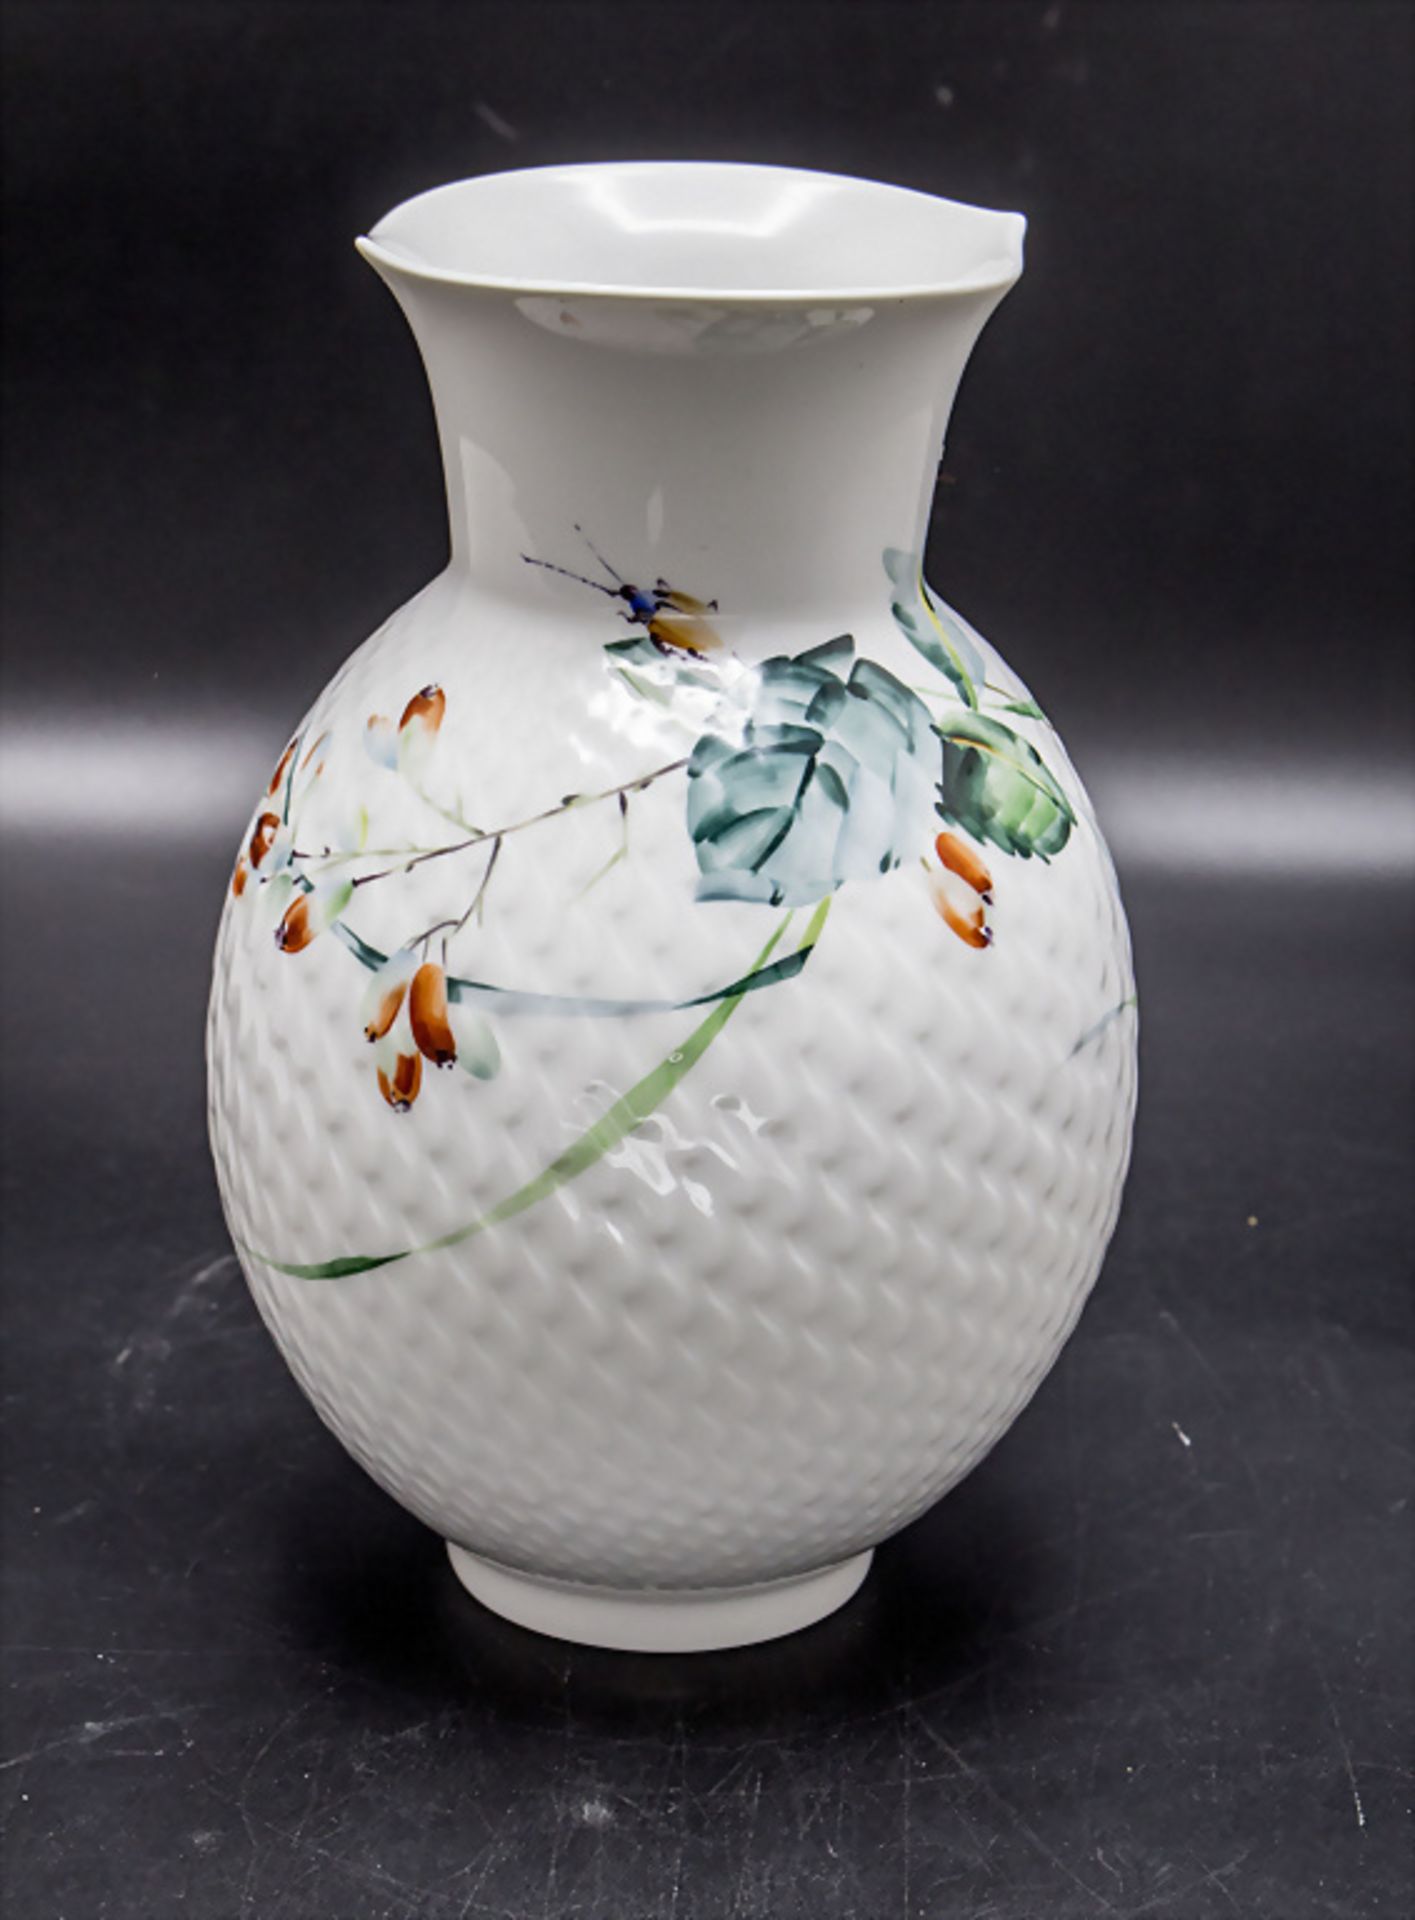 Vase Wellenspiel 'Waldflora mit Insekten' / A vase with rosechips and insect, Sabine Wachs, ...